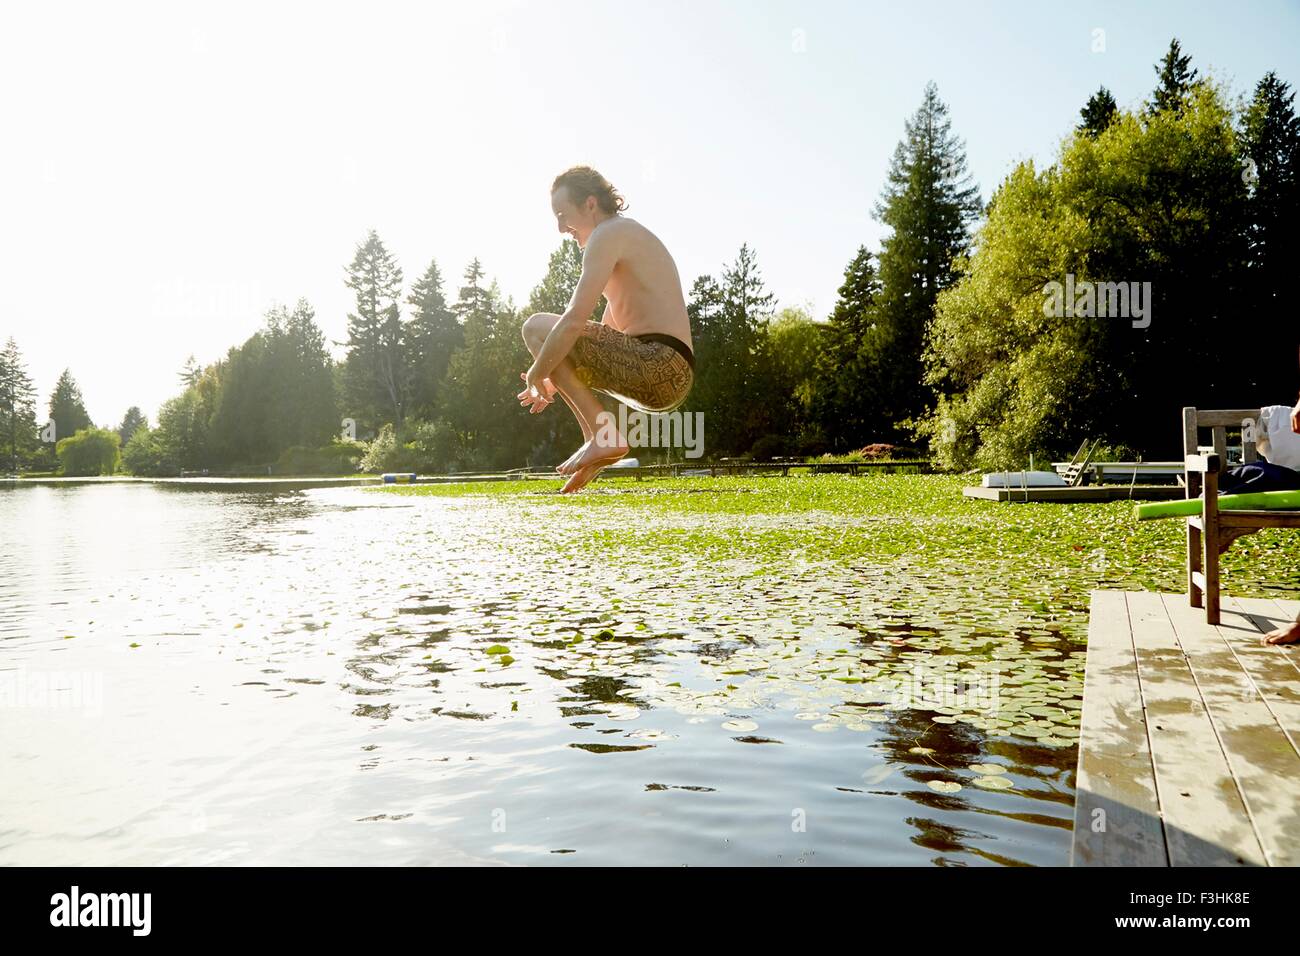 Man jumping into lake, Seattle, Washington, USA Stock Photo